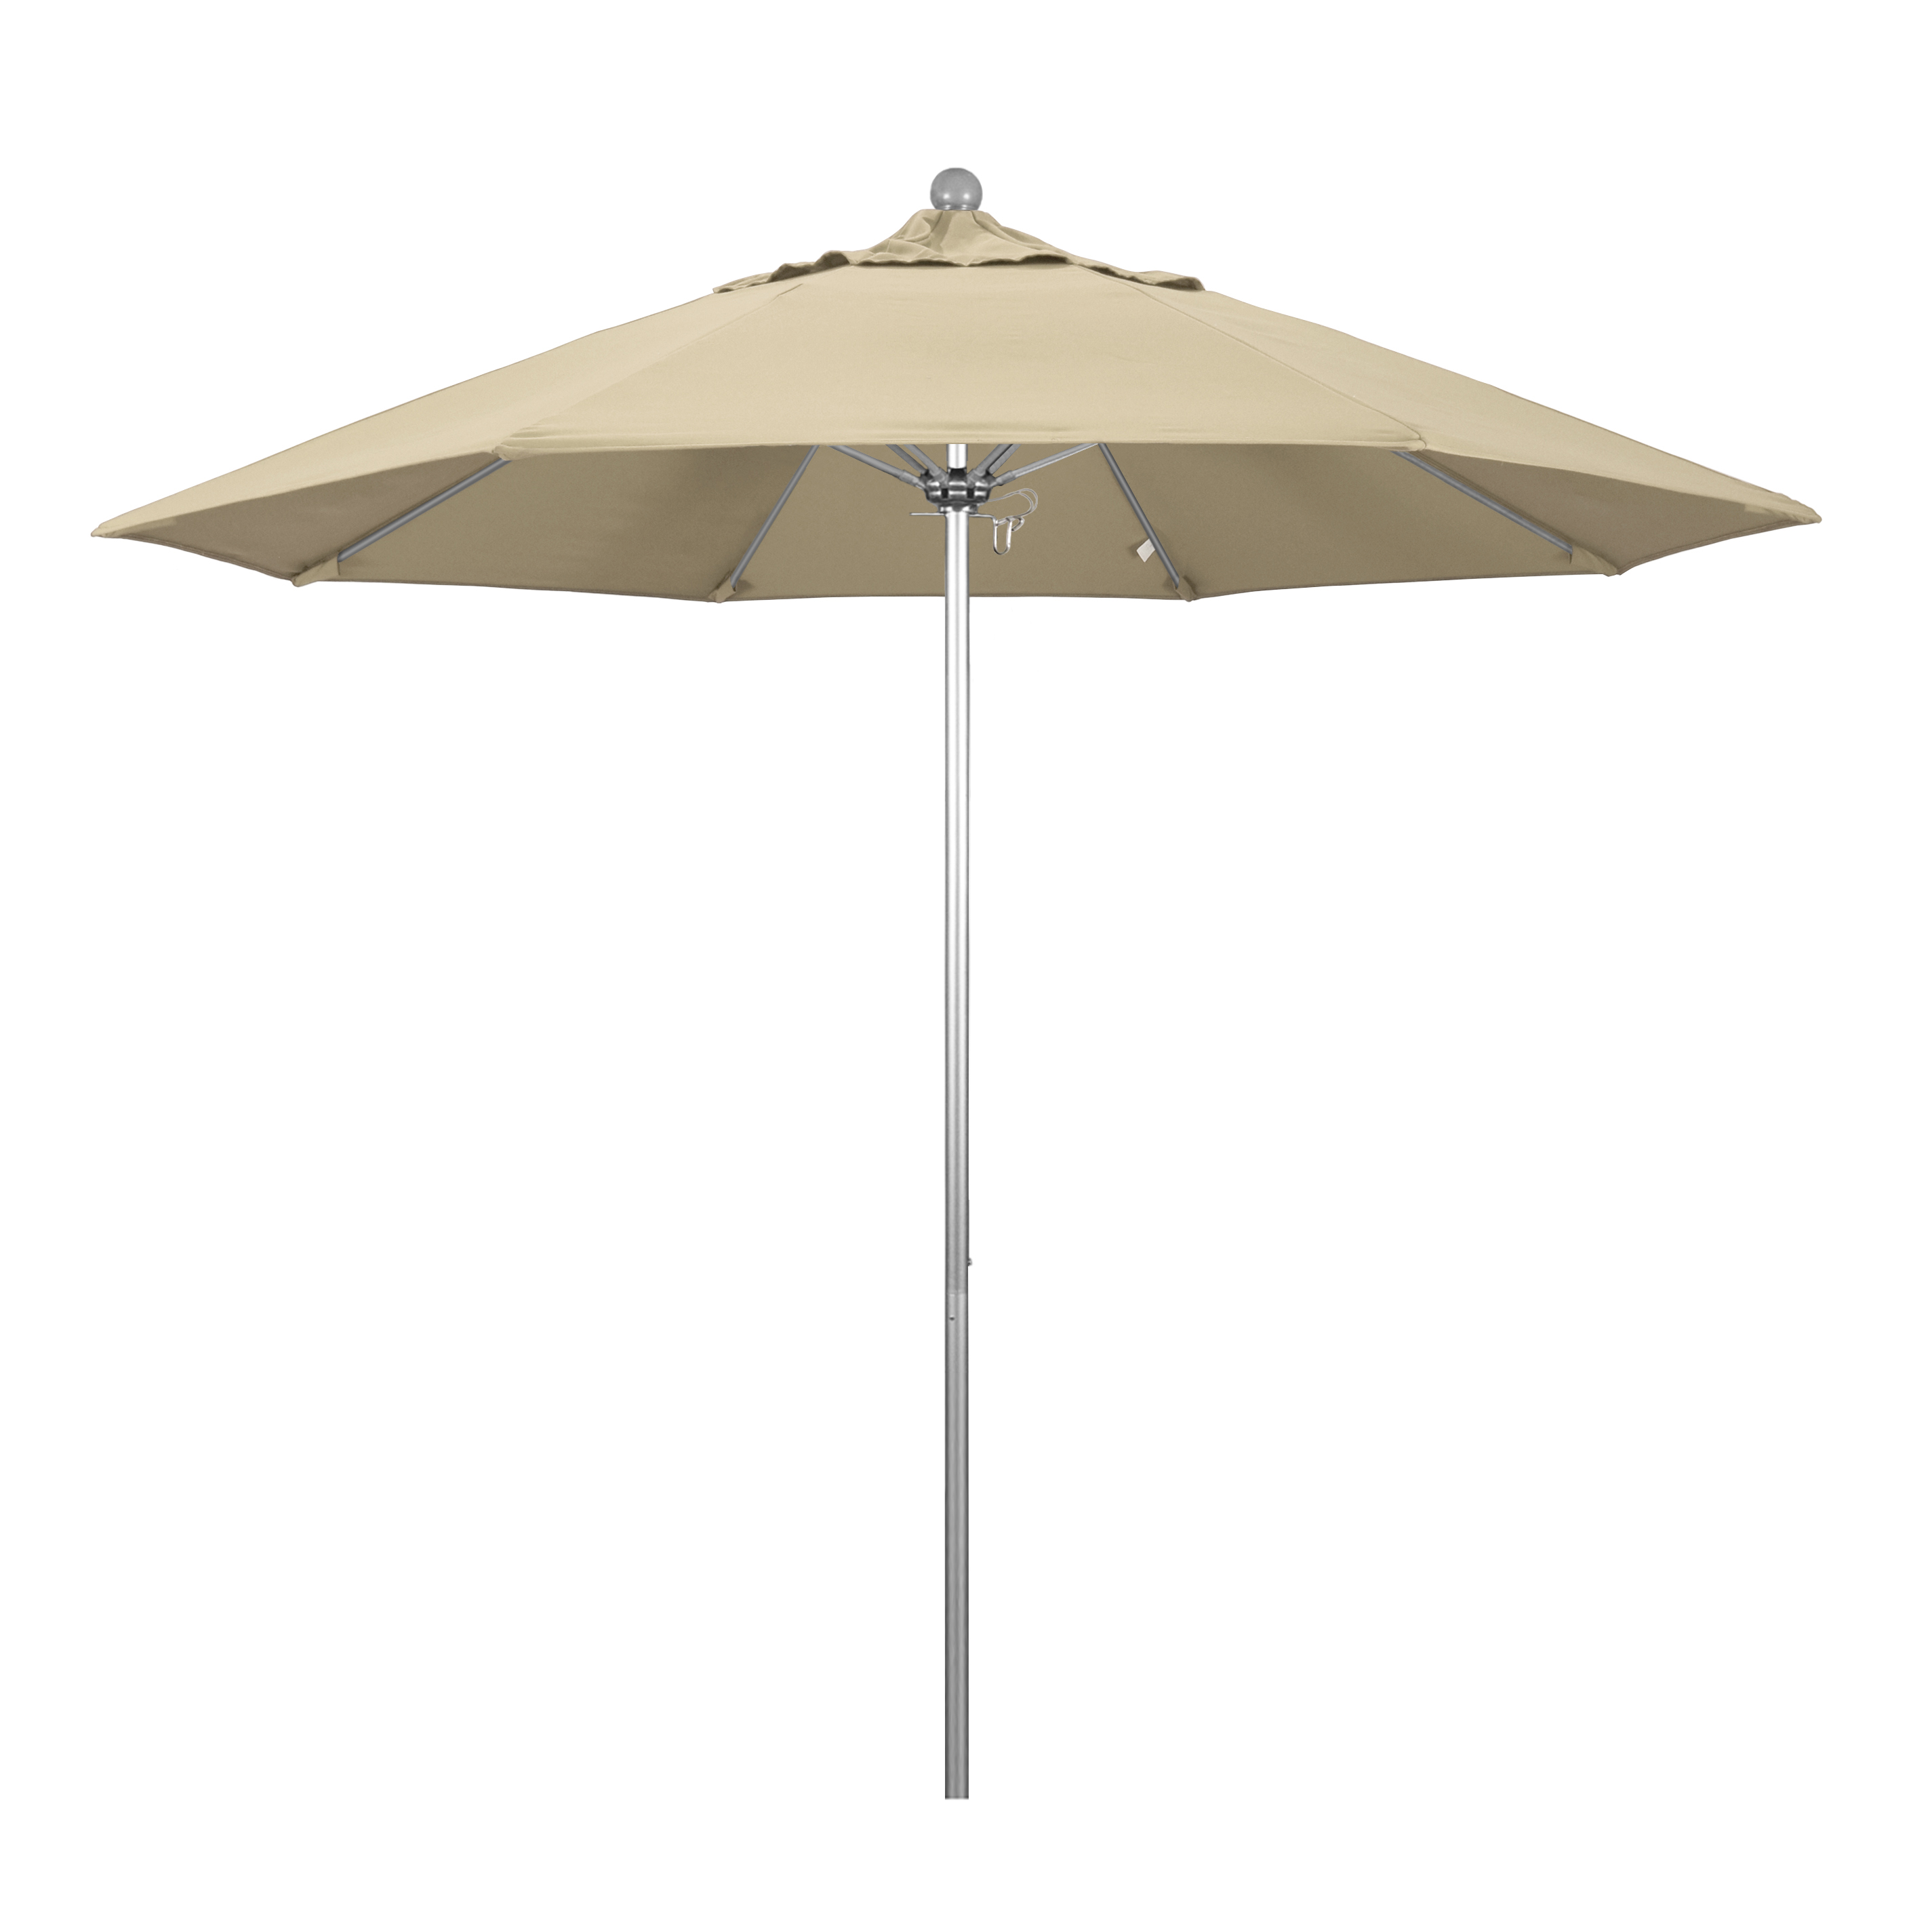 Alto908002-5422 9 Ft. Fiberglass Pulley Open Market Umbrella - Anodized And Sunbrella-antique Beige